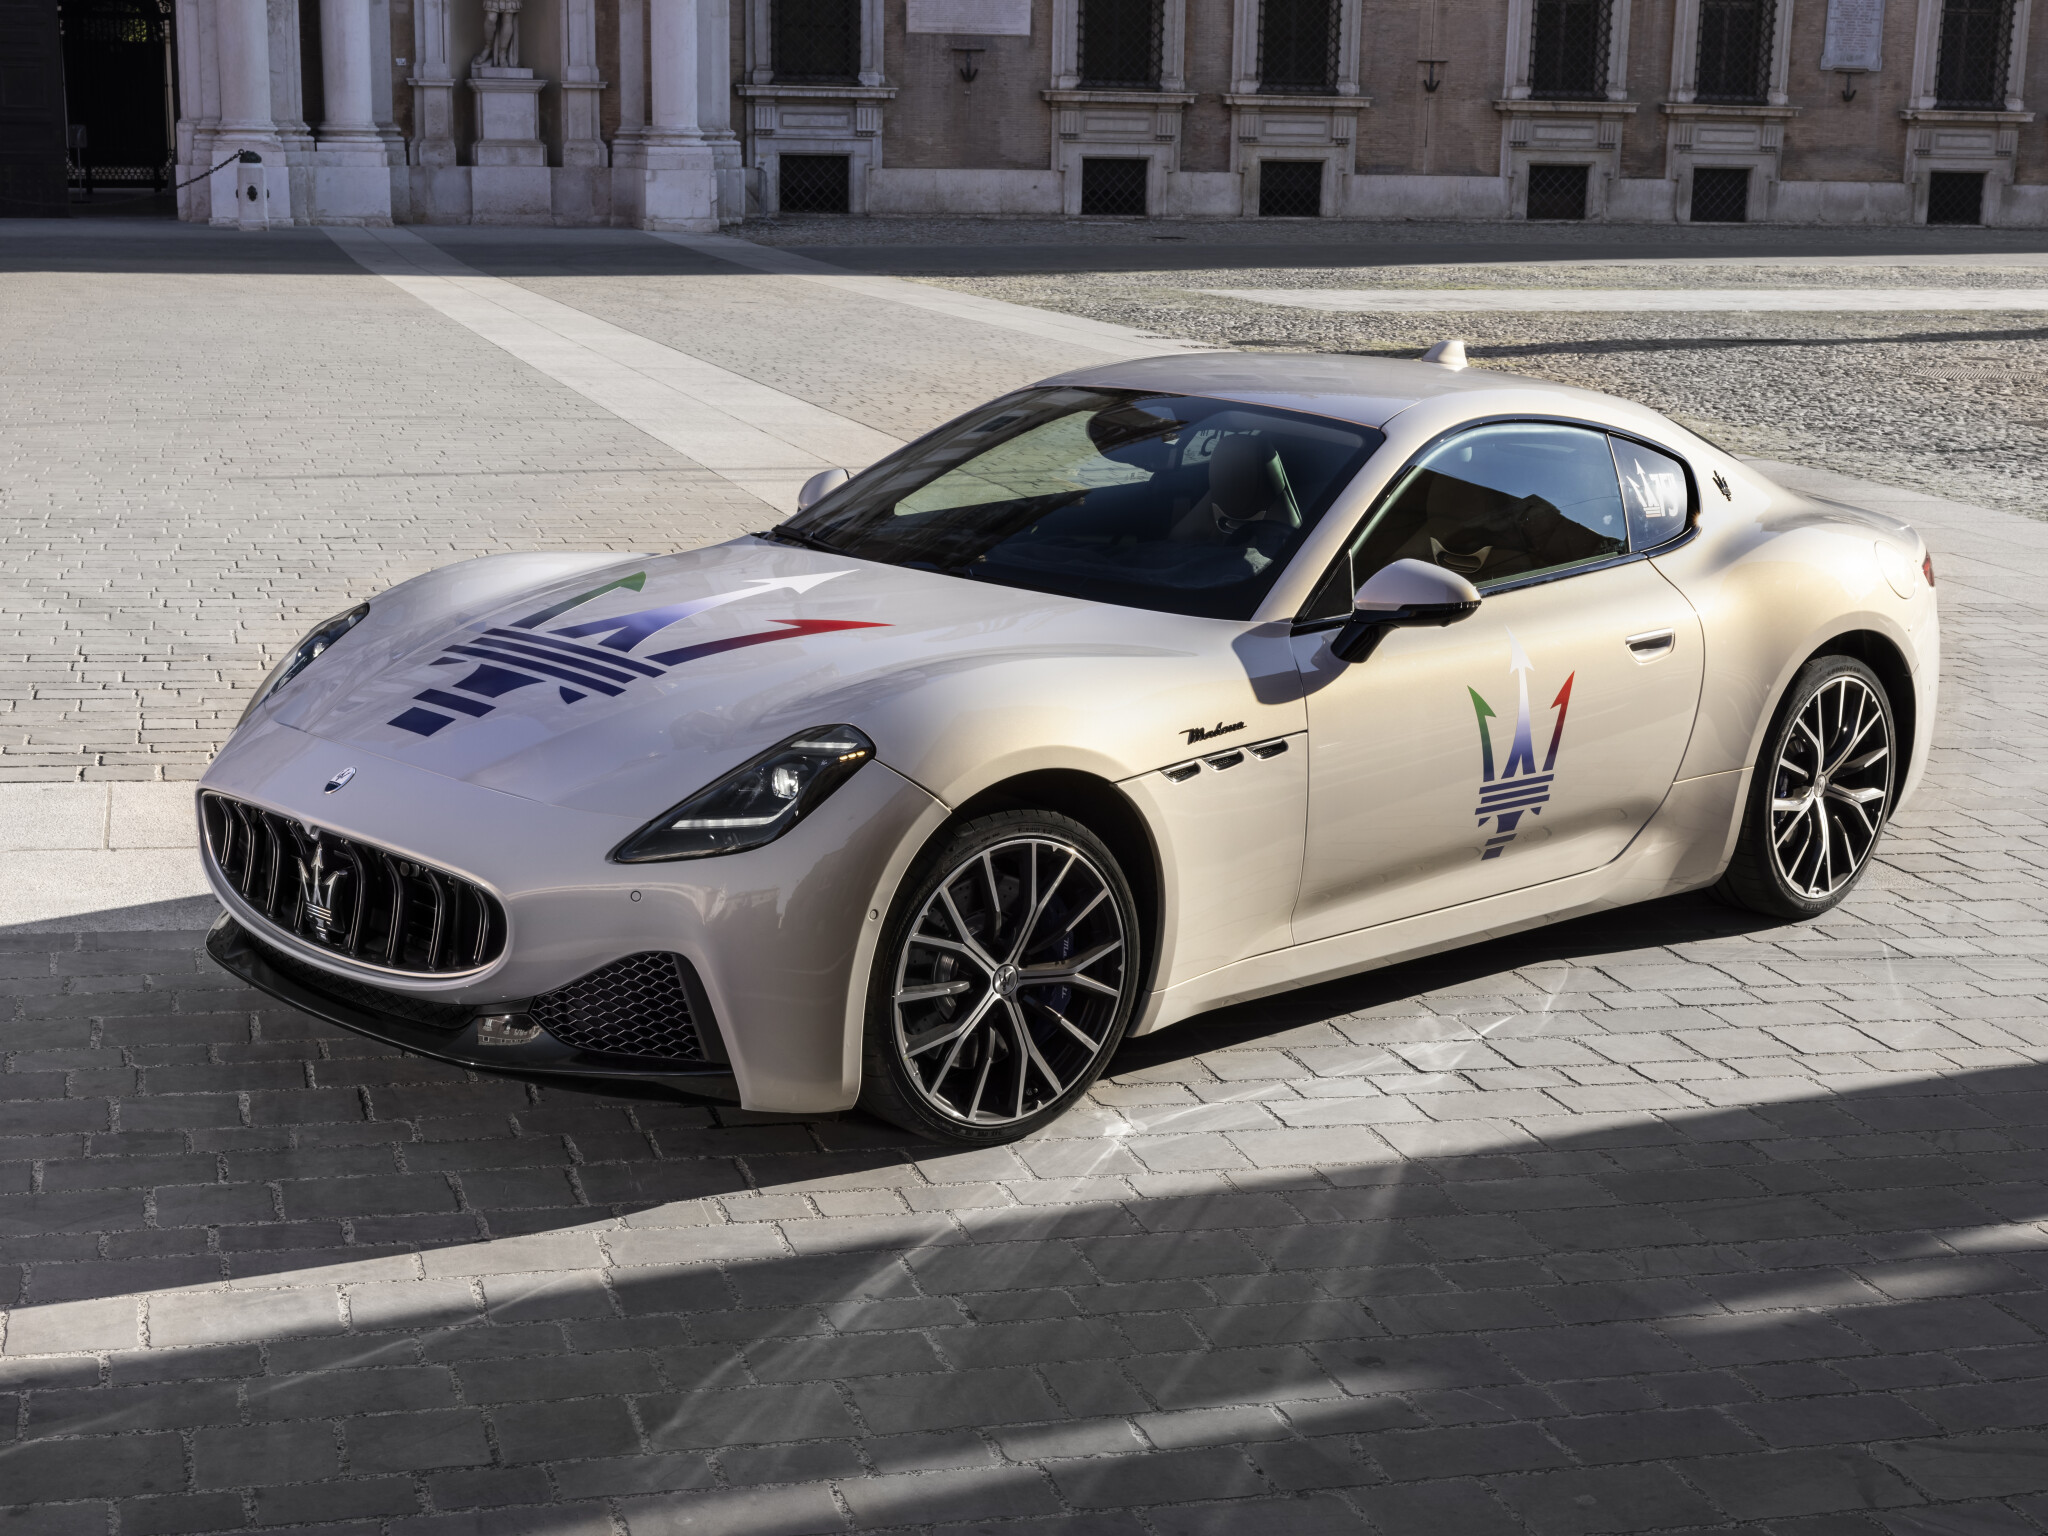 Limited-edition Maserati GranTurismo farewells iconic combustion engine